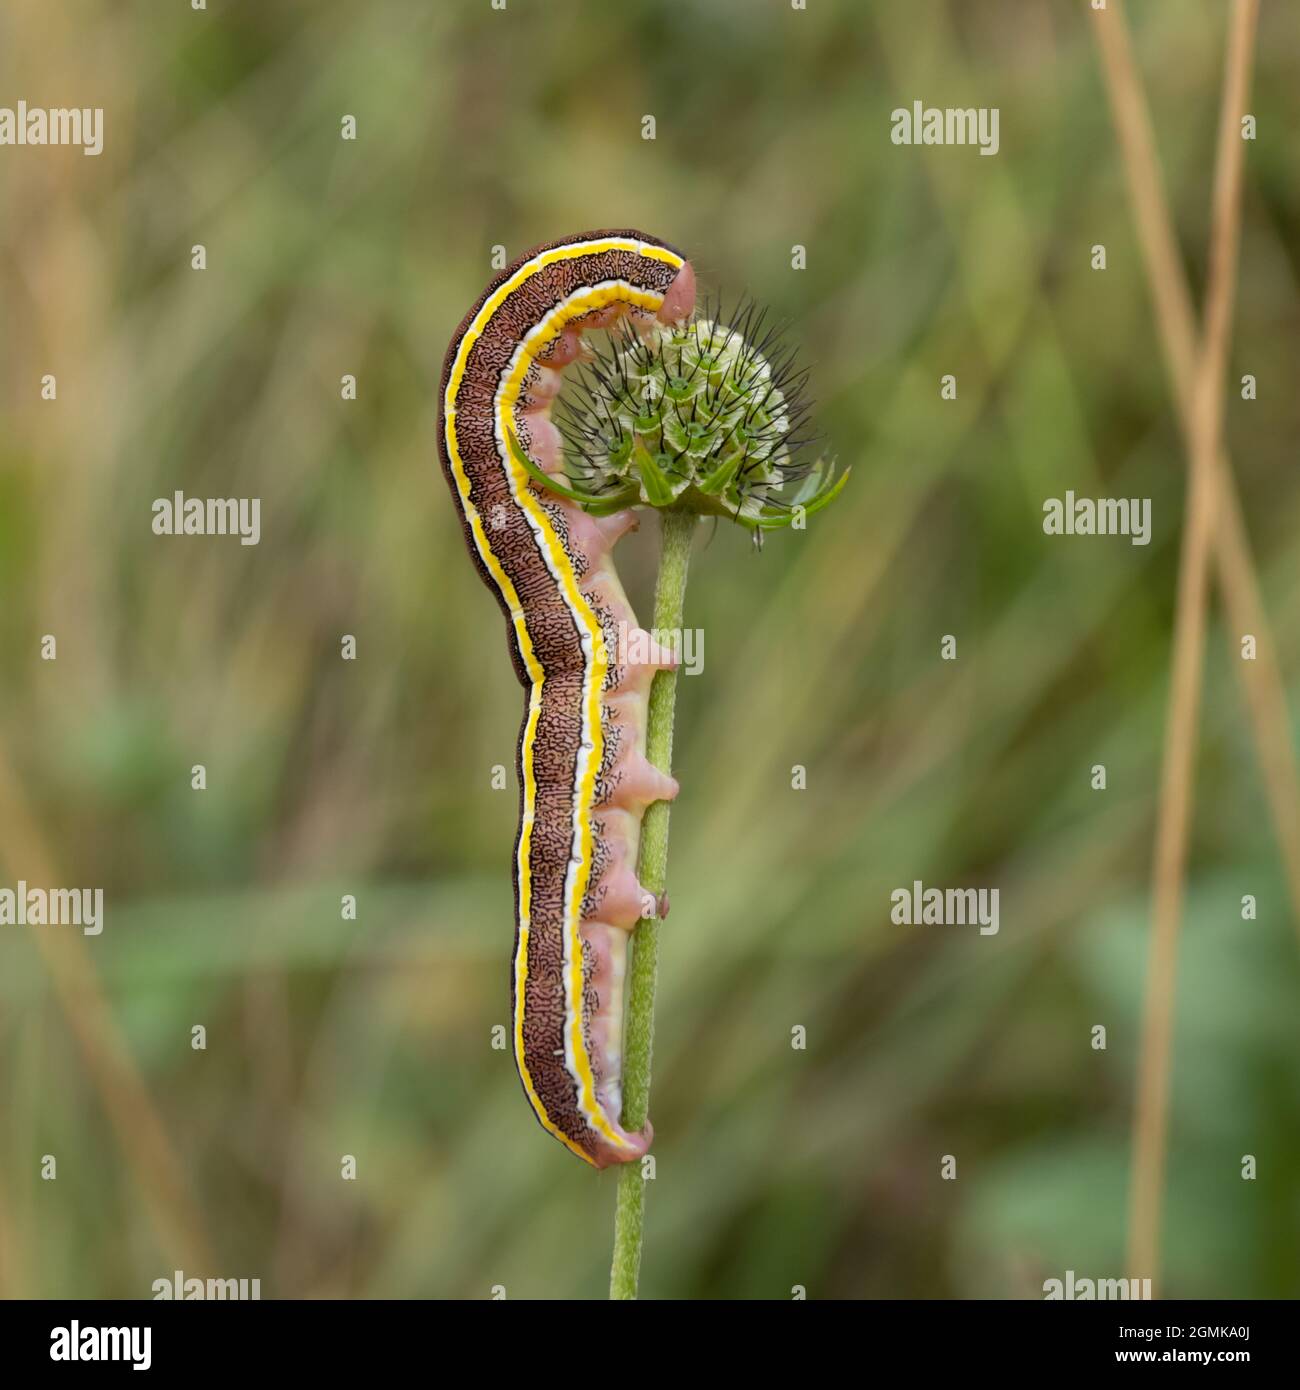 The caterpillar or larvae of a Broom Moth, Ceramica pisi, feeding on a plant stem. Stock Photo